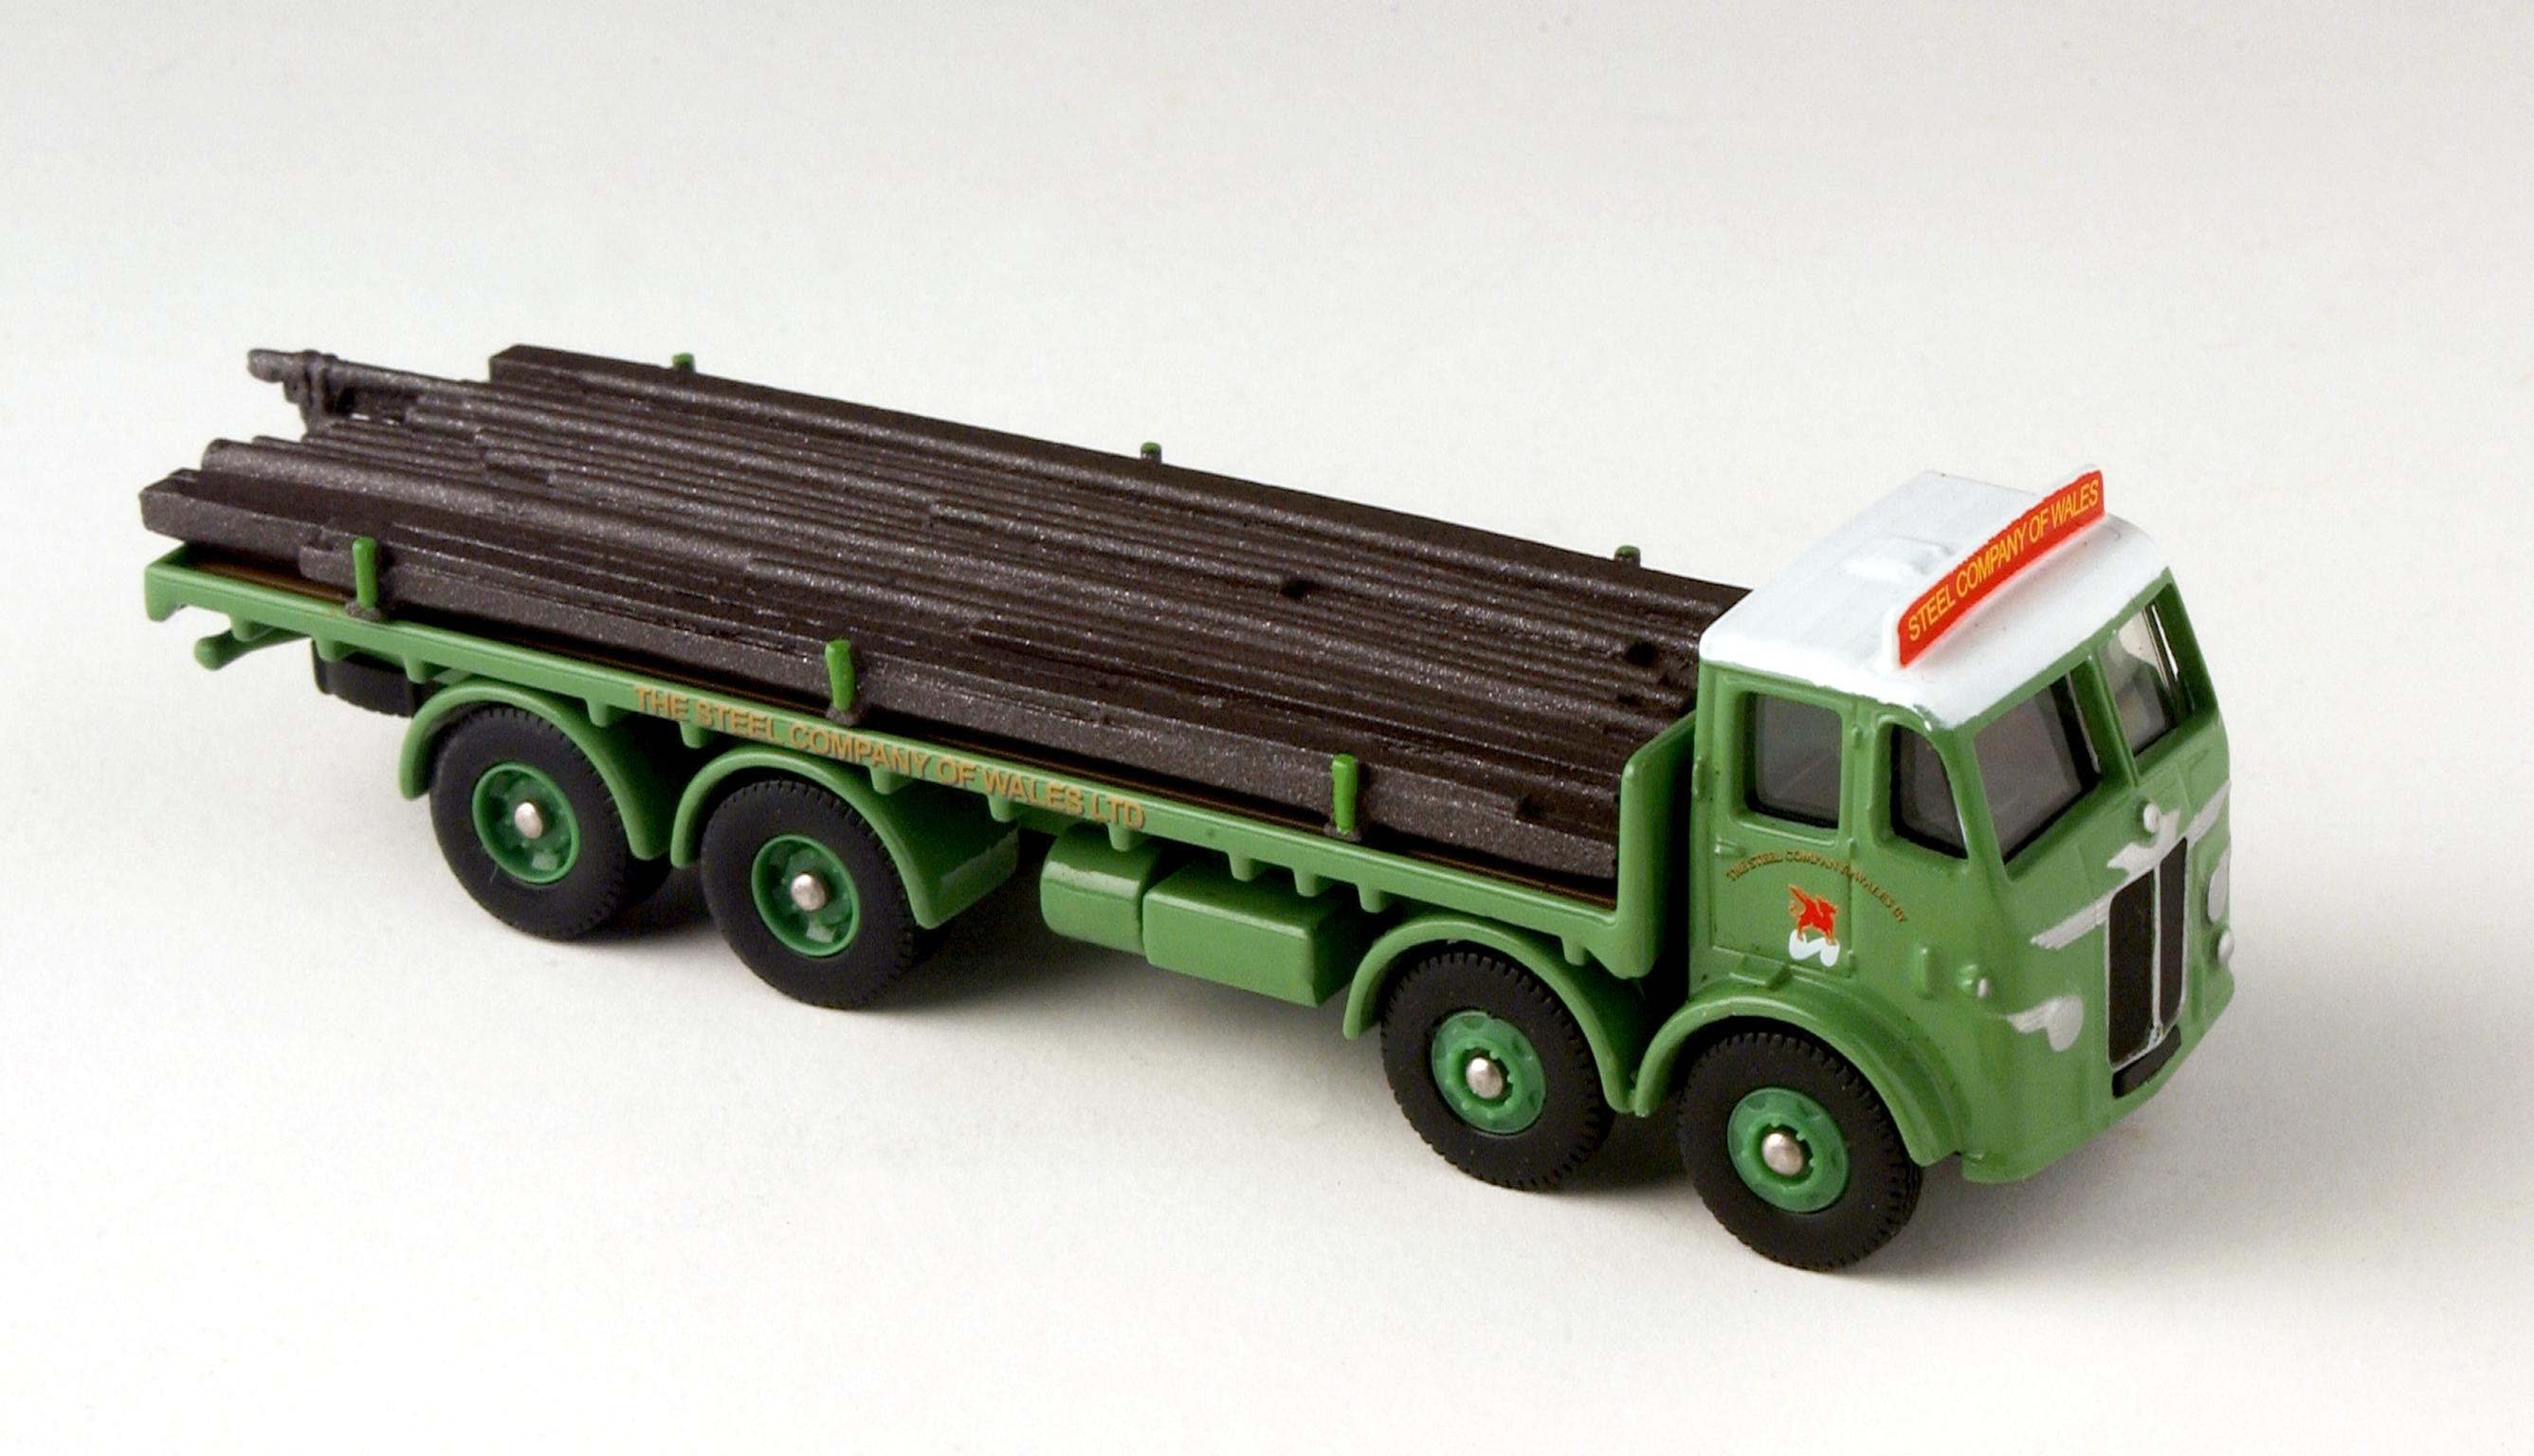 Steel Company of Wales lorry model